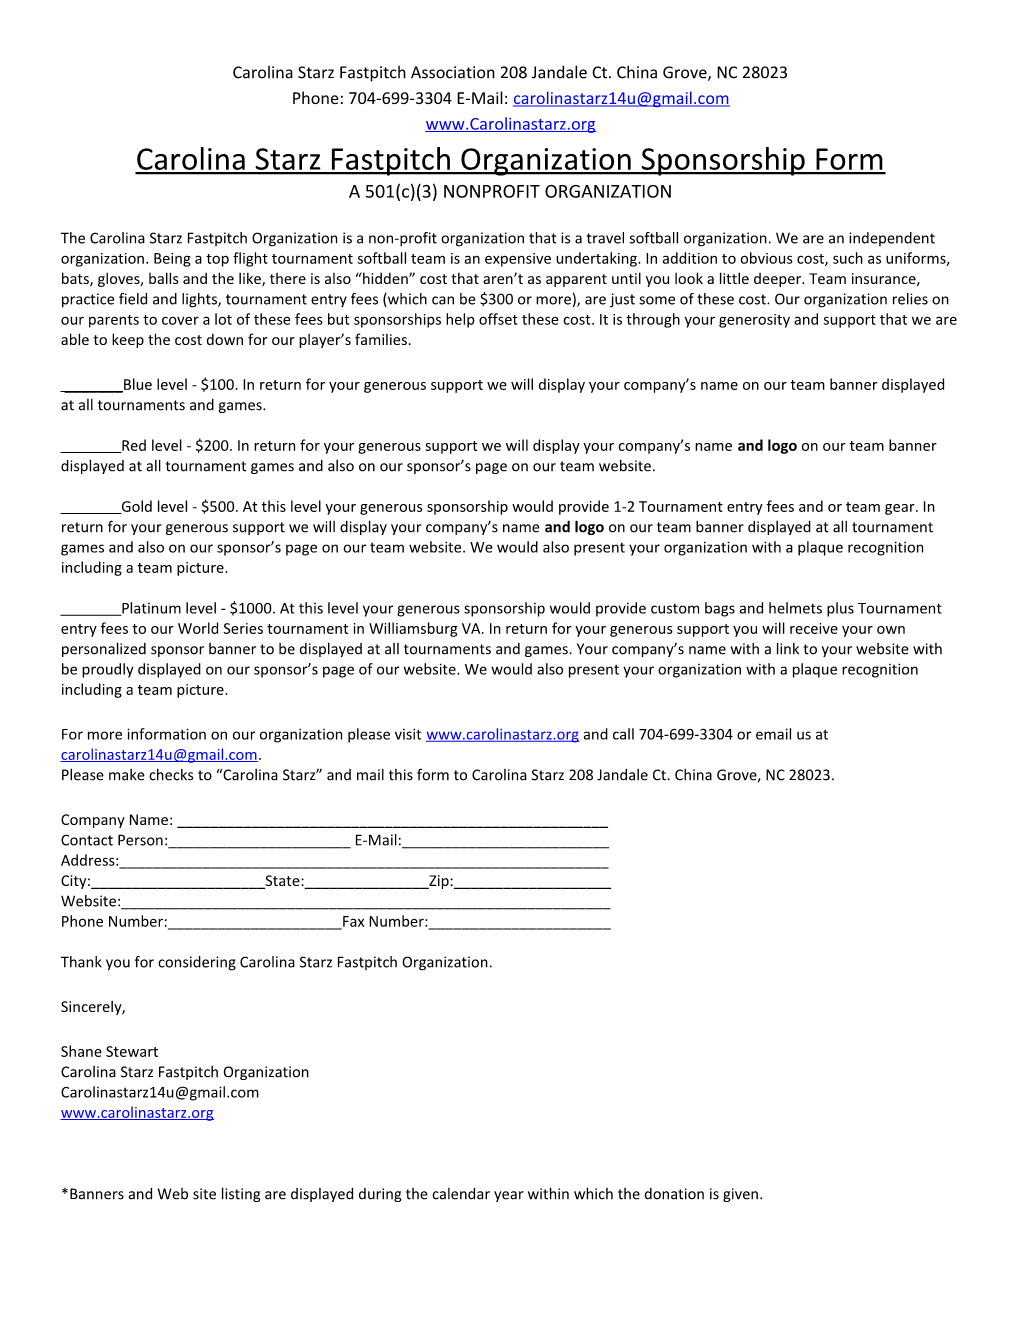 Carolina Starz Fastpitch Organizationsponsorship Form